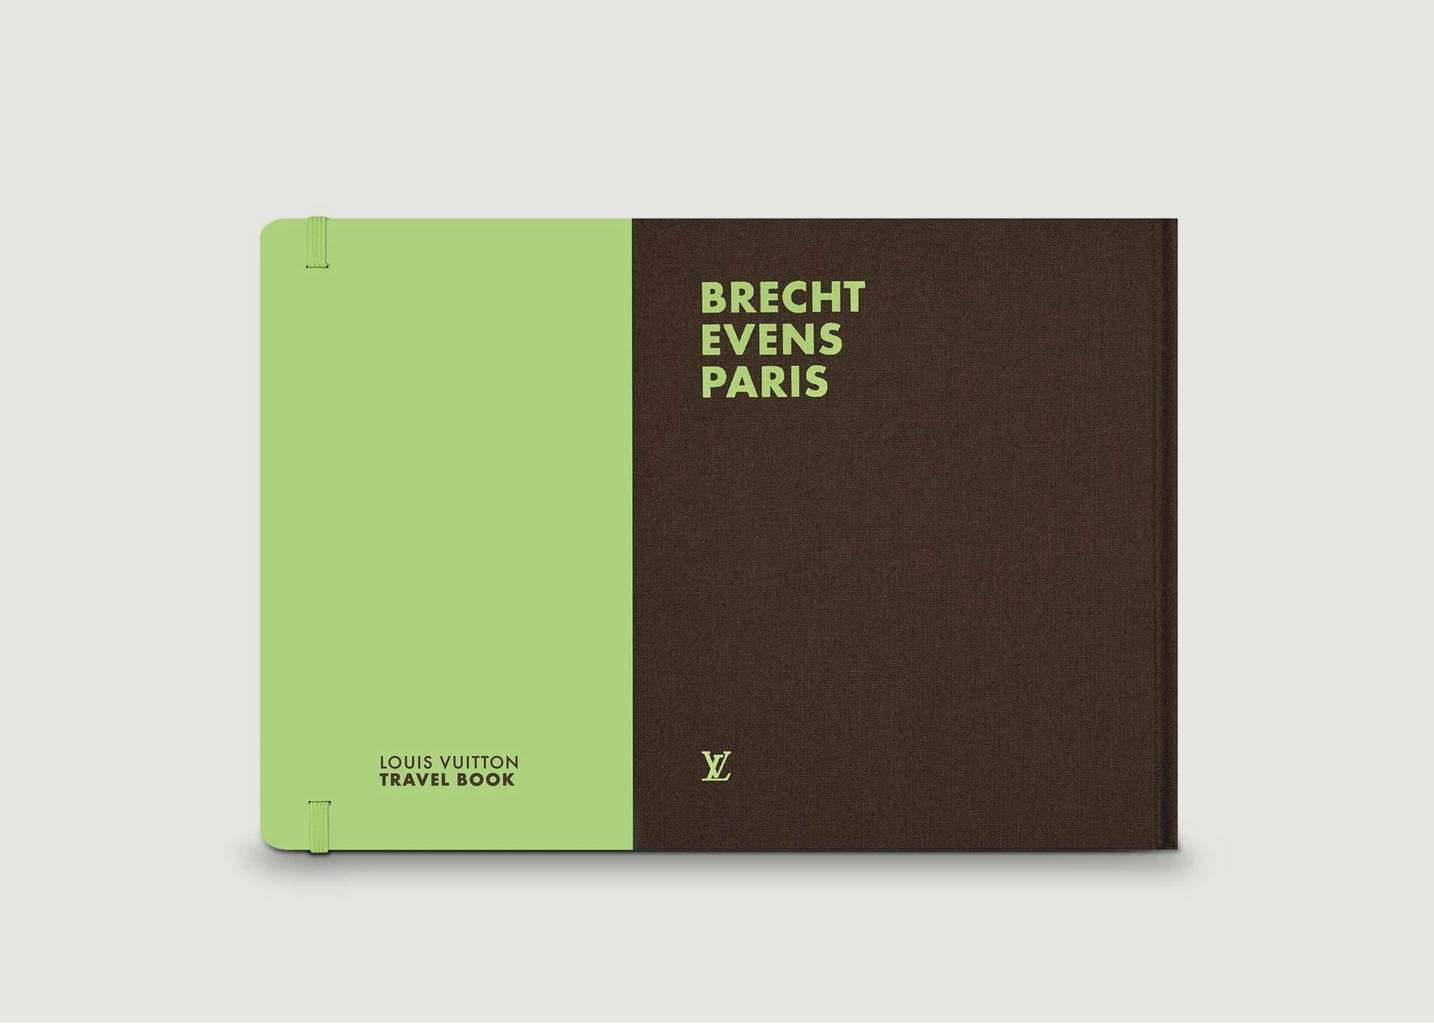 Livre Travel Book Paris Brecht Events - Louis Vuitton Travel Book